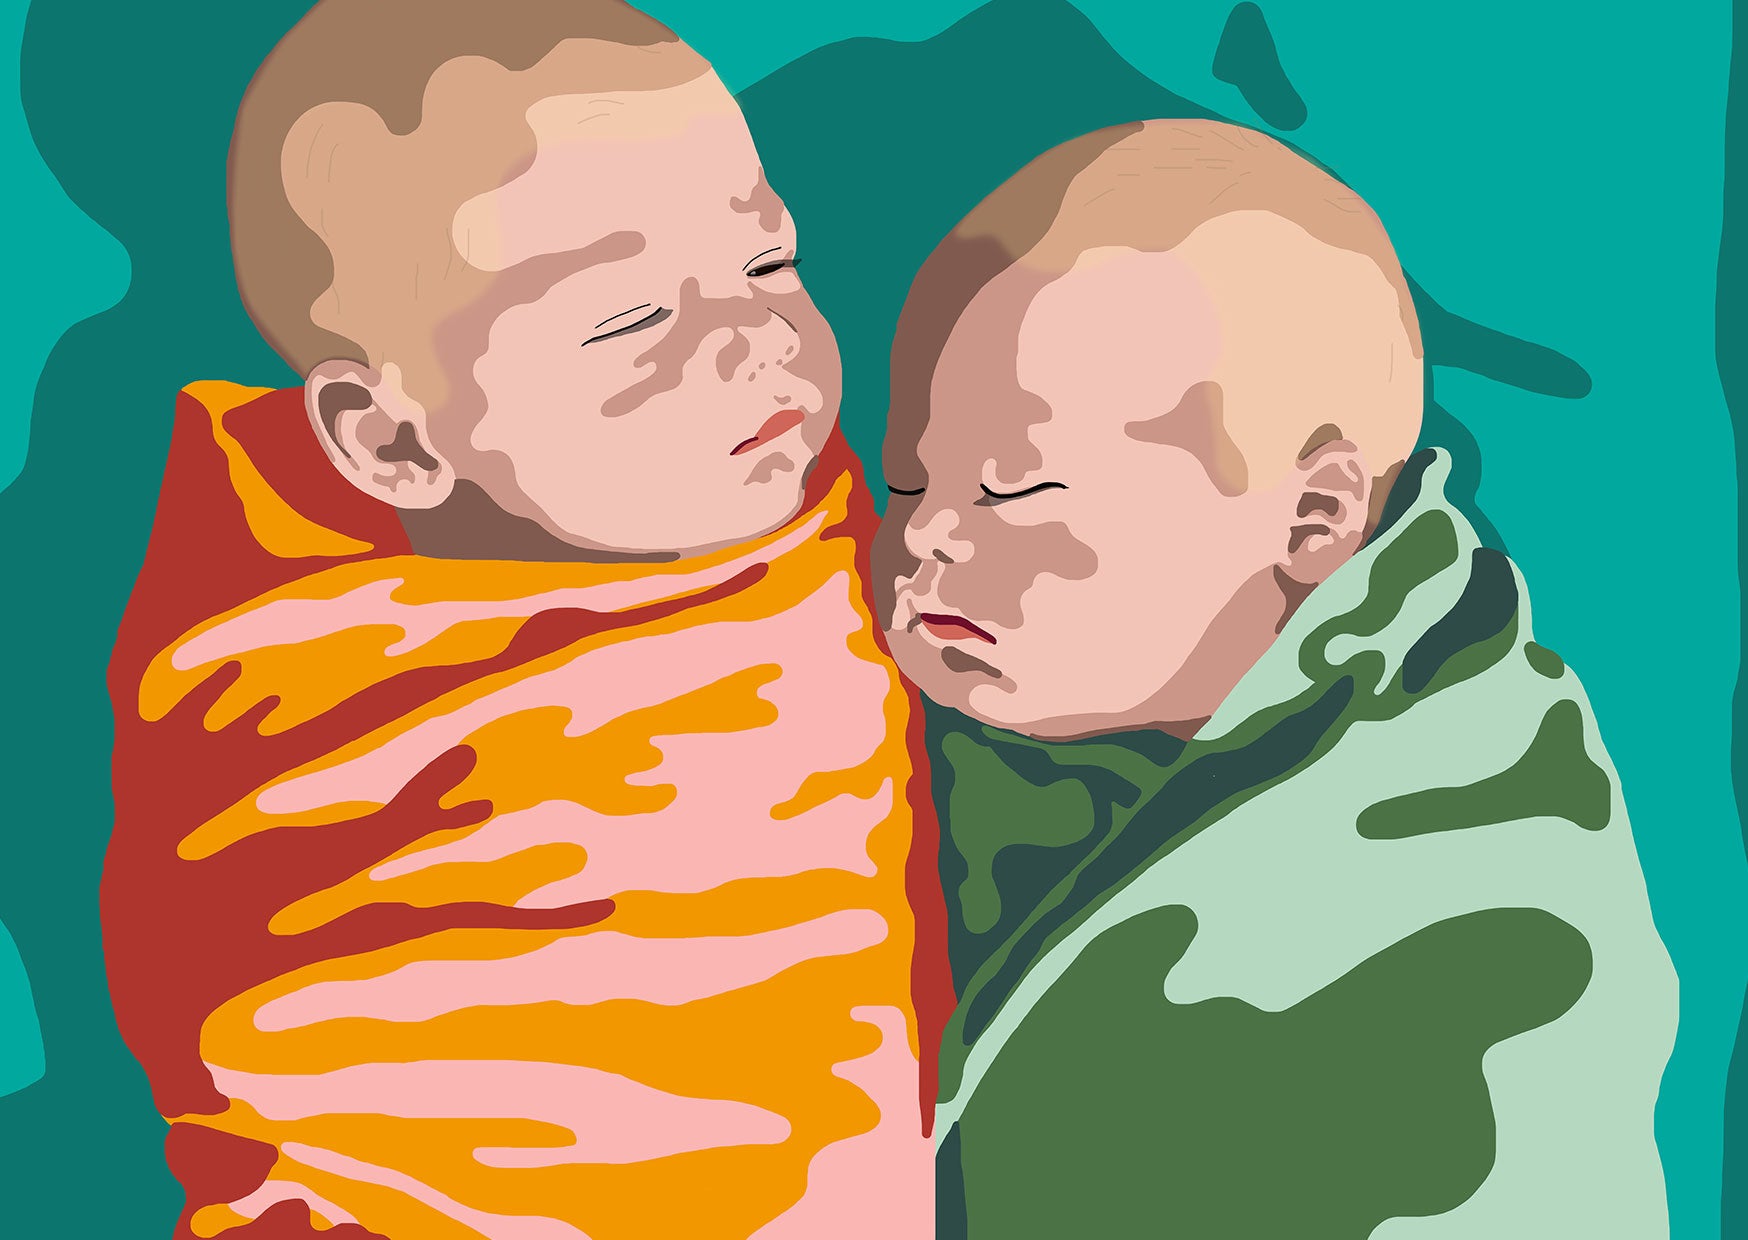 Commission digital illustration of new born twins